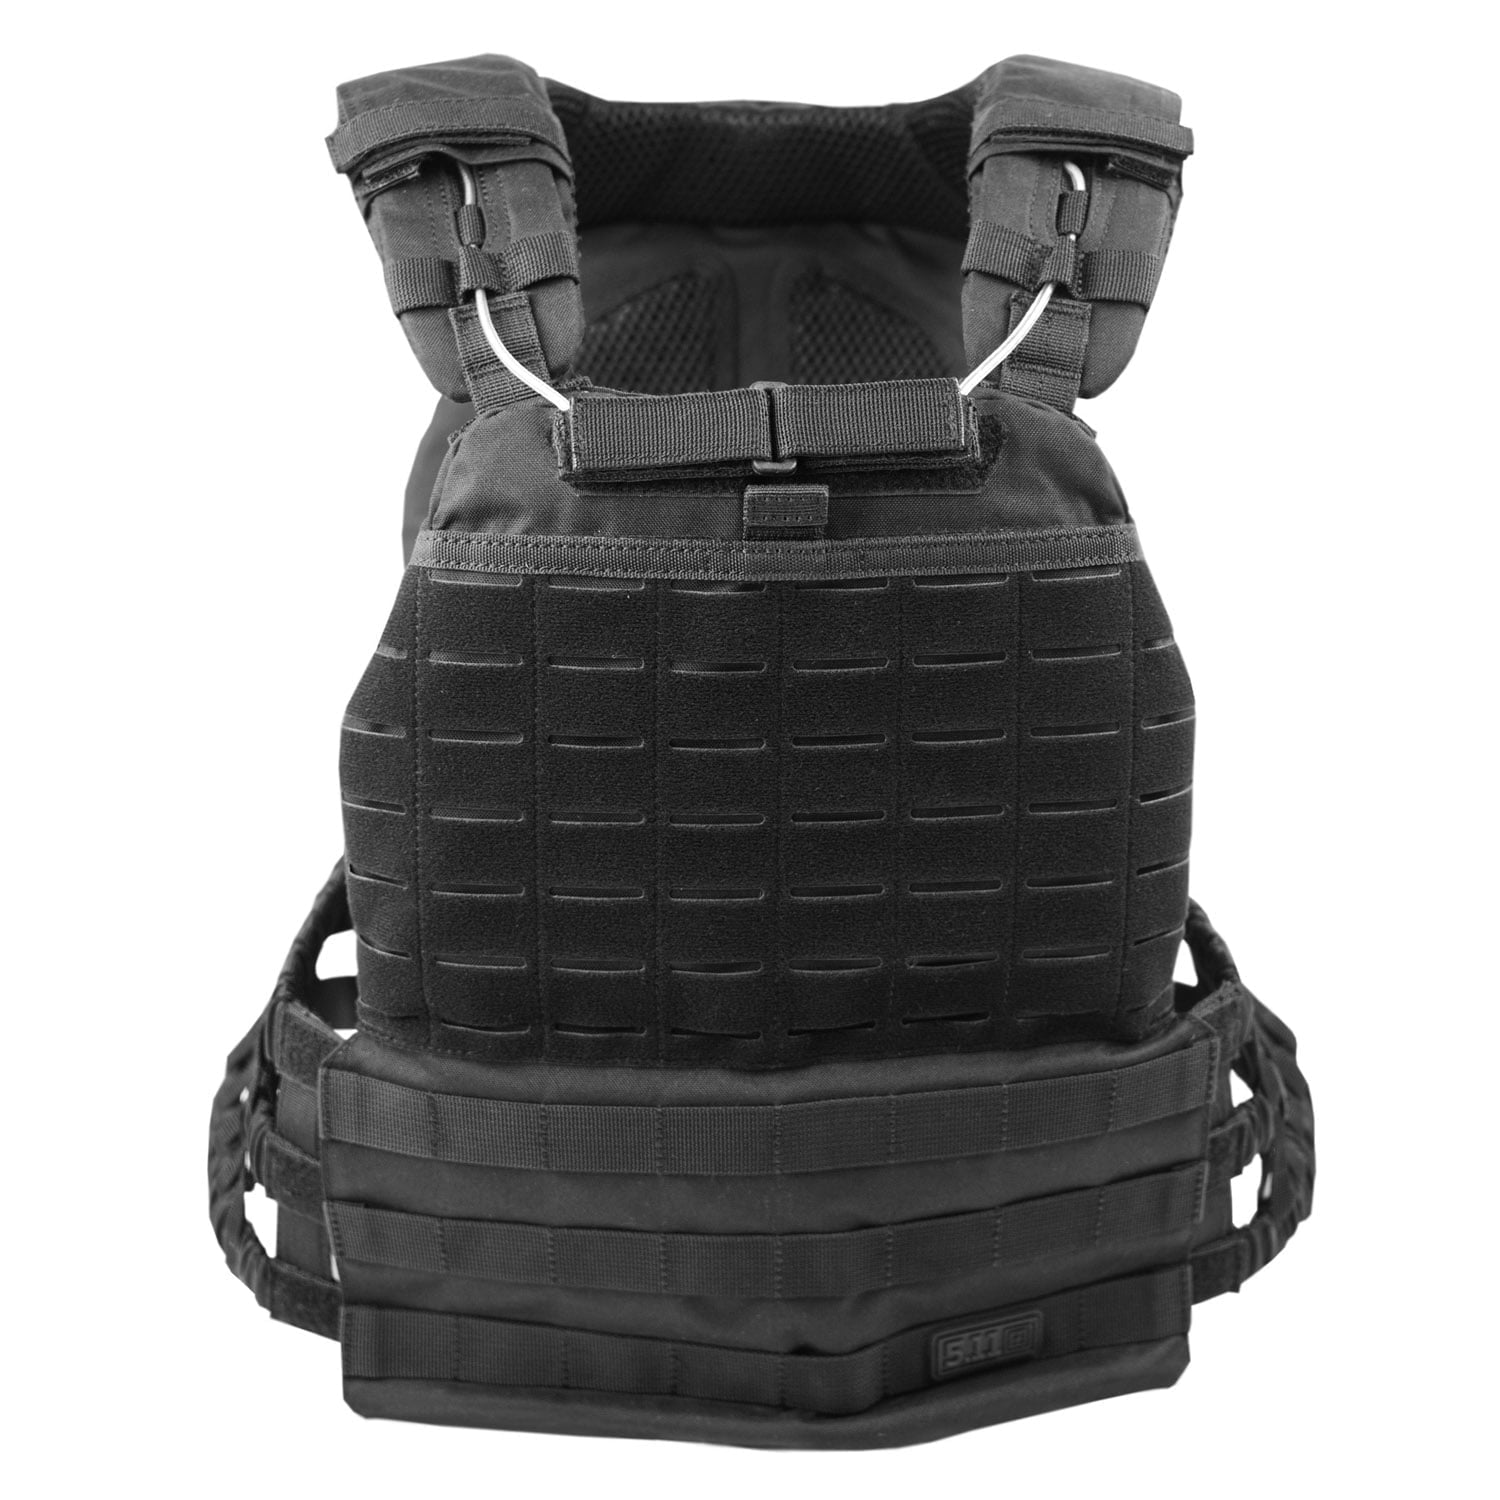 Bulletproof vest - USA Gun Shop